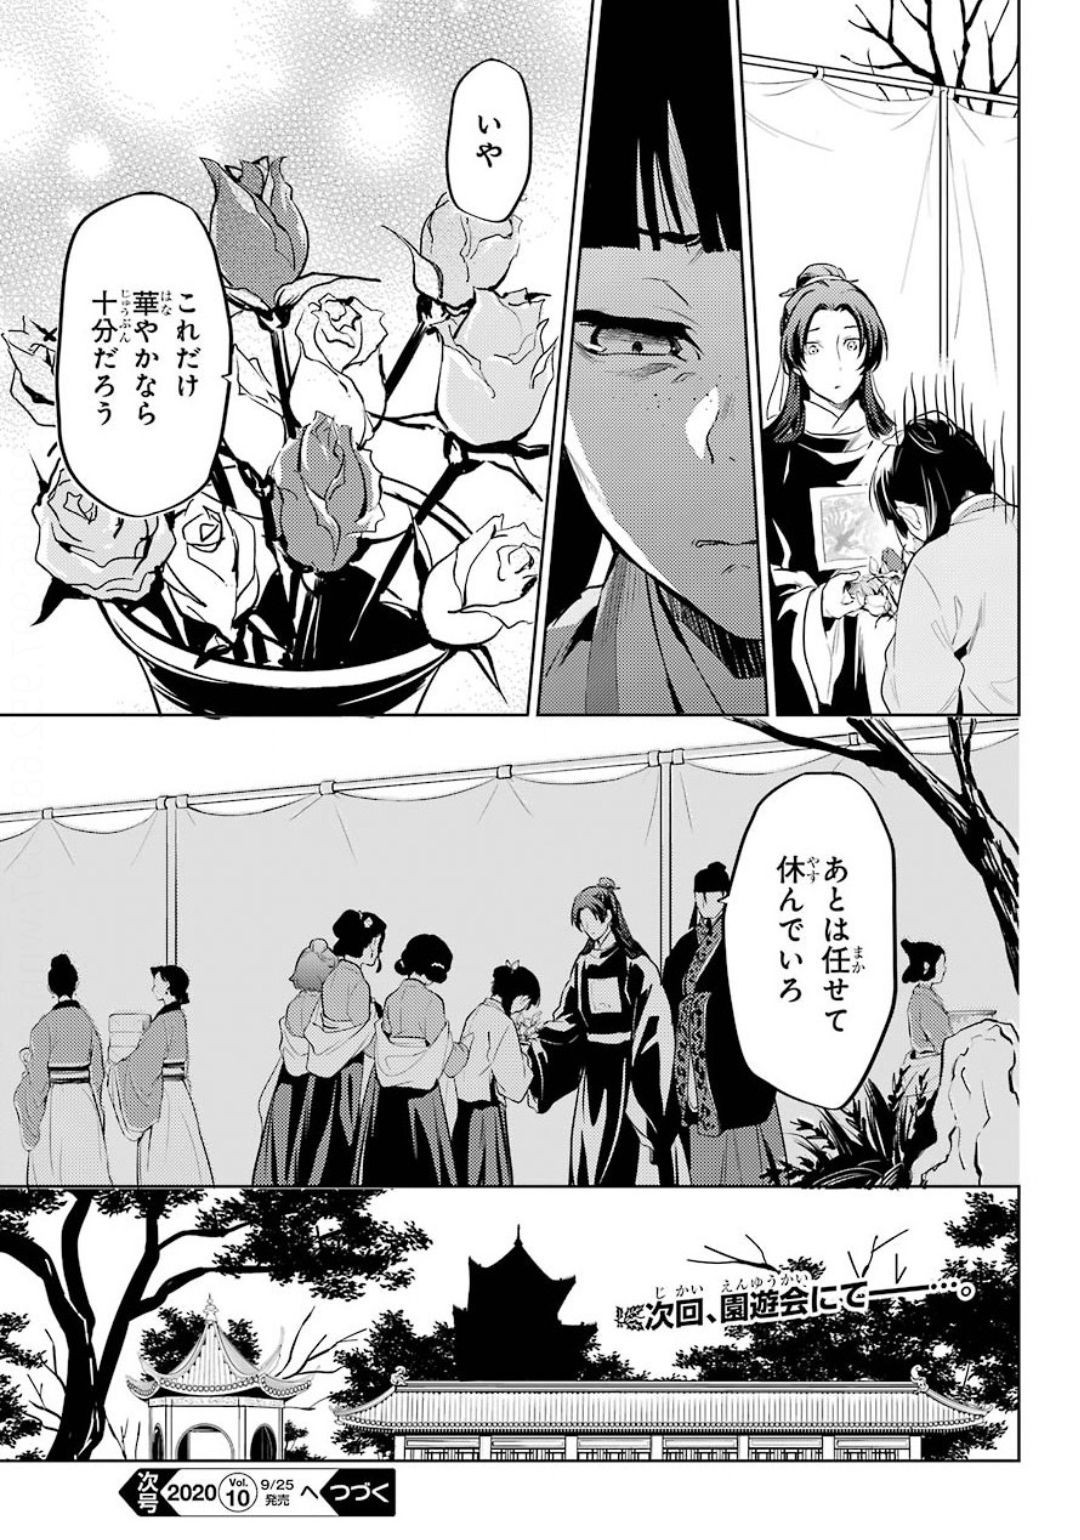 Kusuriya no Hitorigoto - Chapter 36-1 - Page 23